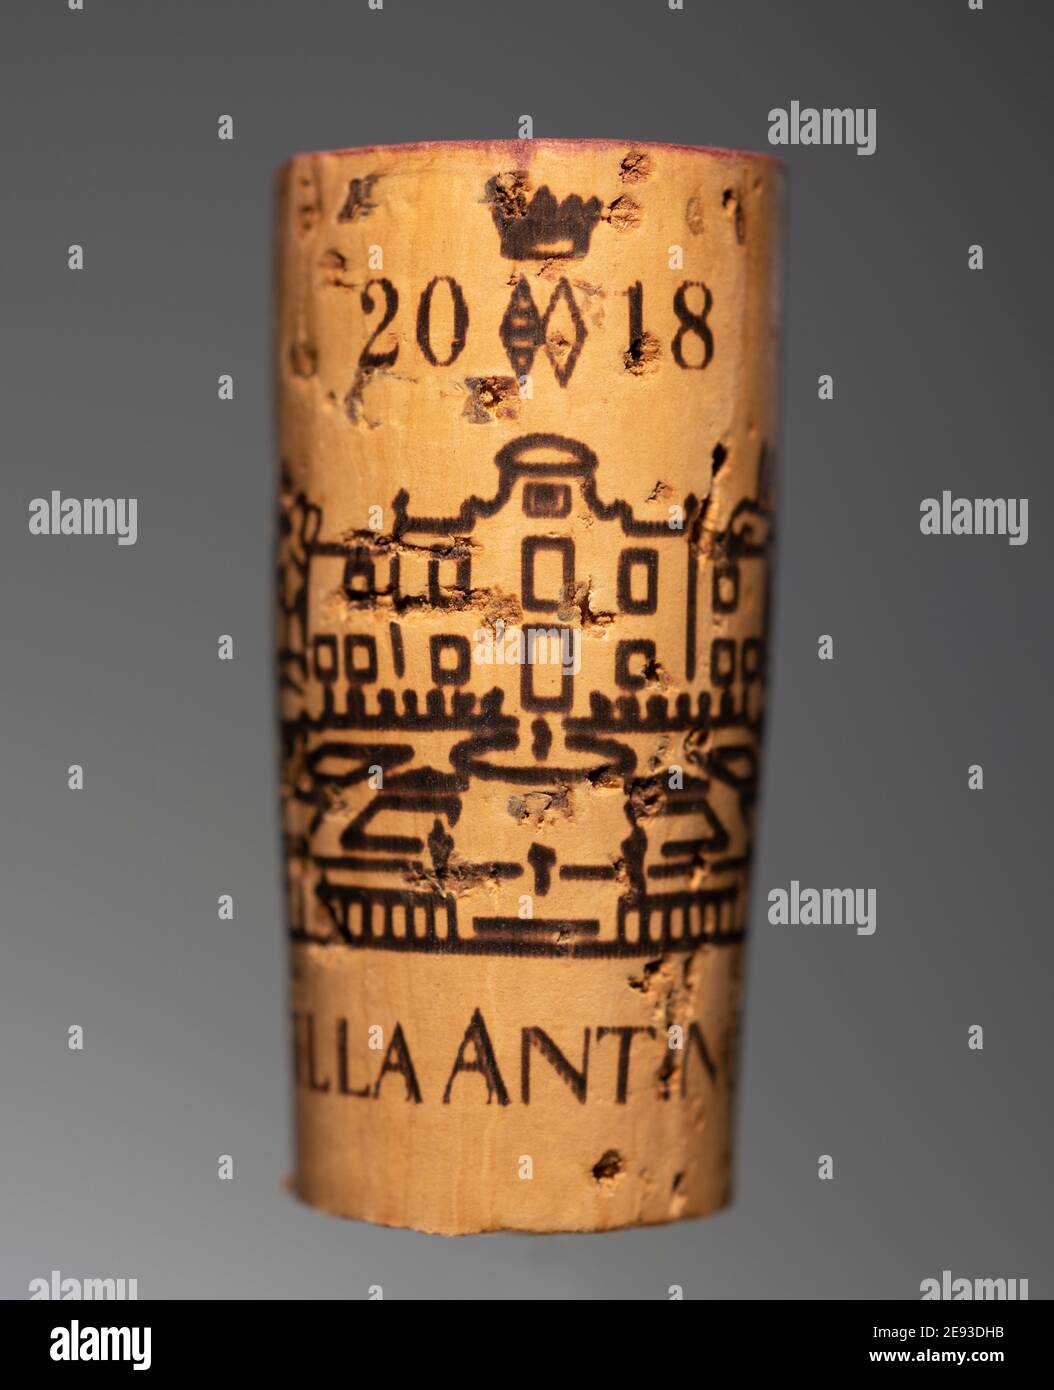 Villa Antinori 2018 botella de vino italiano Chianti corcho en neutro fondo gris Foto de stock